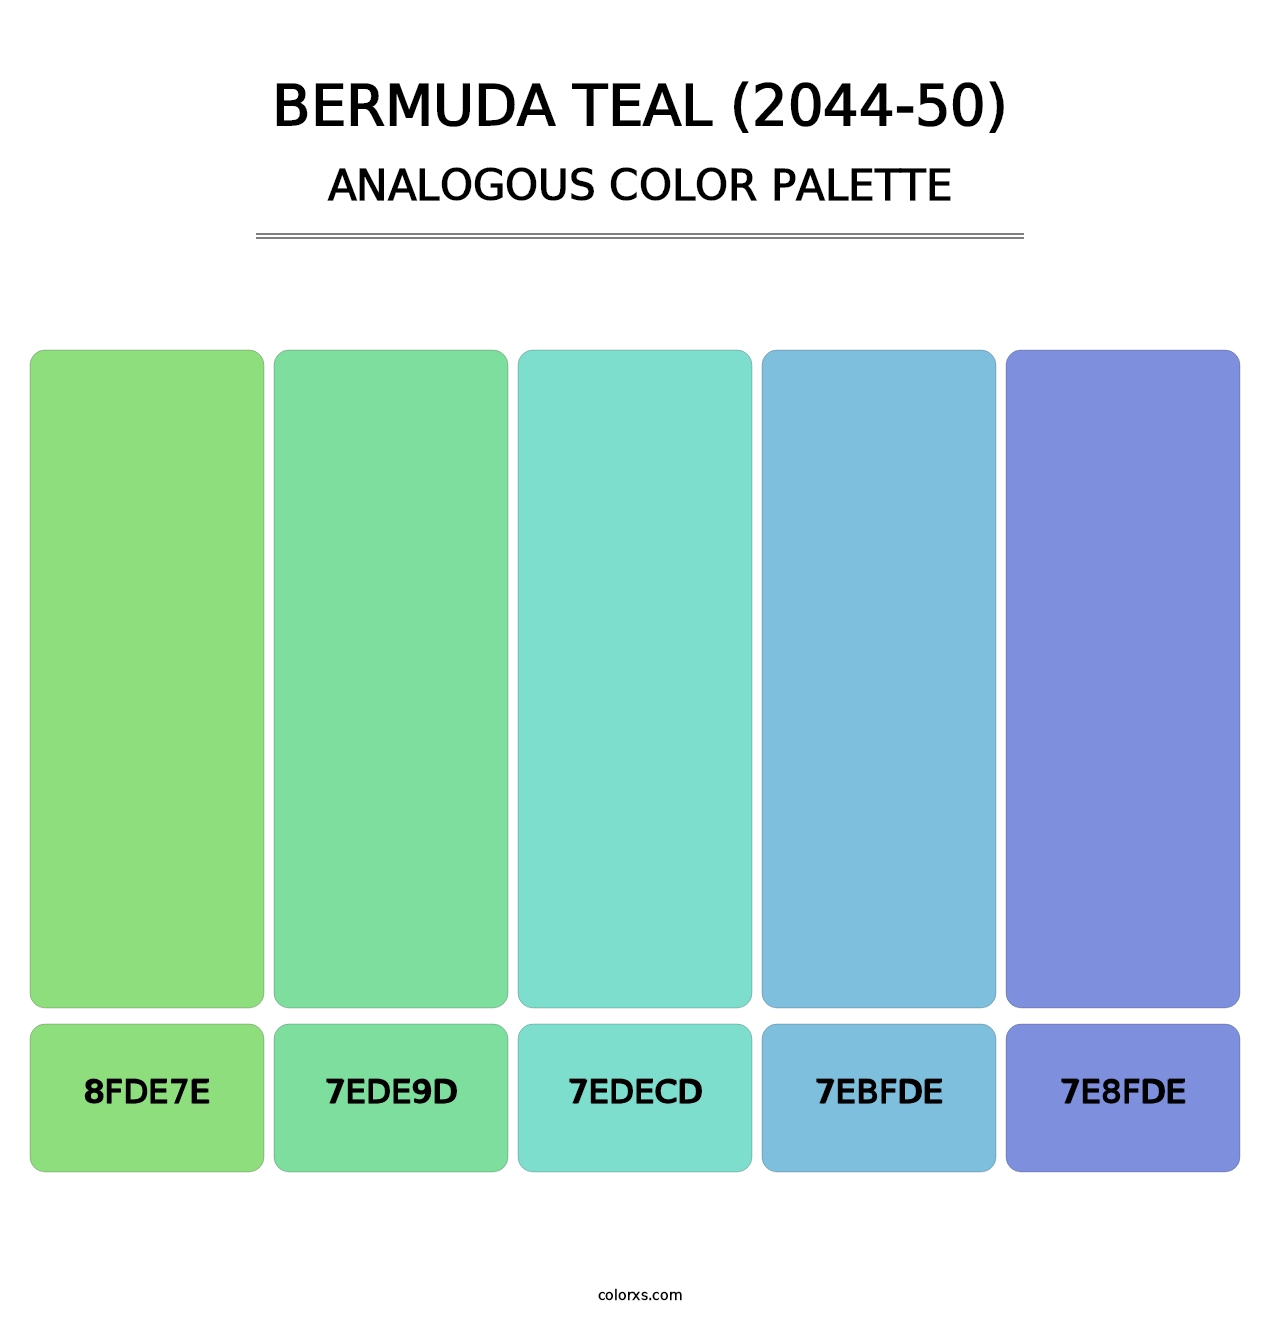 Bermuda Teal (2044-50) - Analogous Color Palette